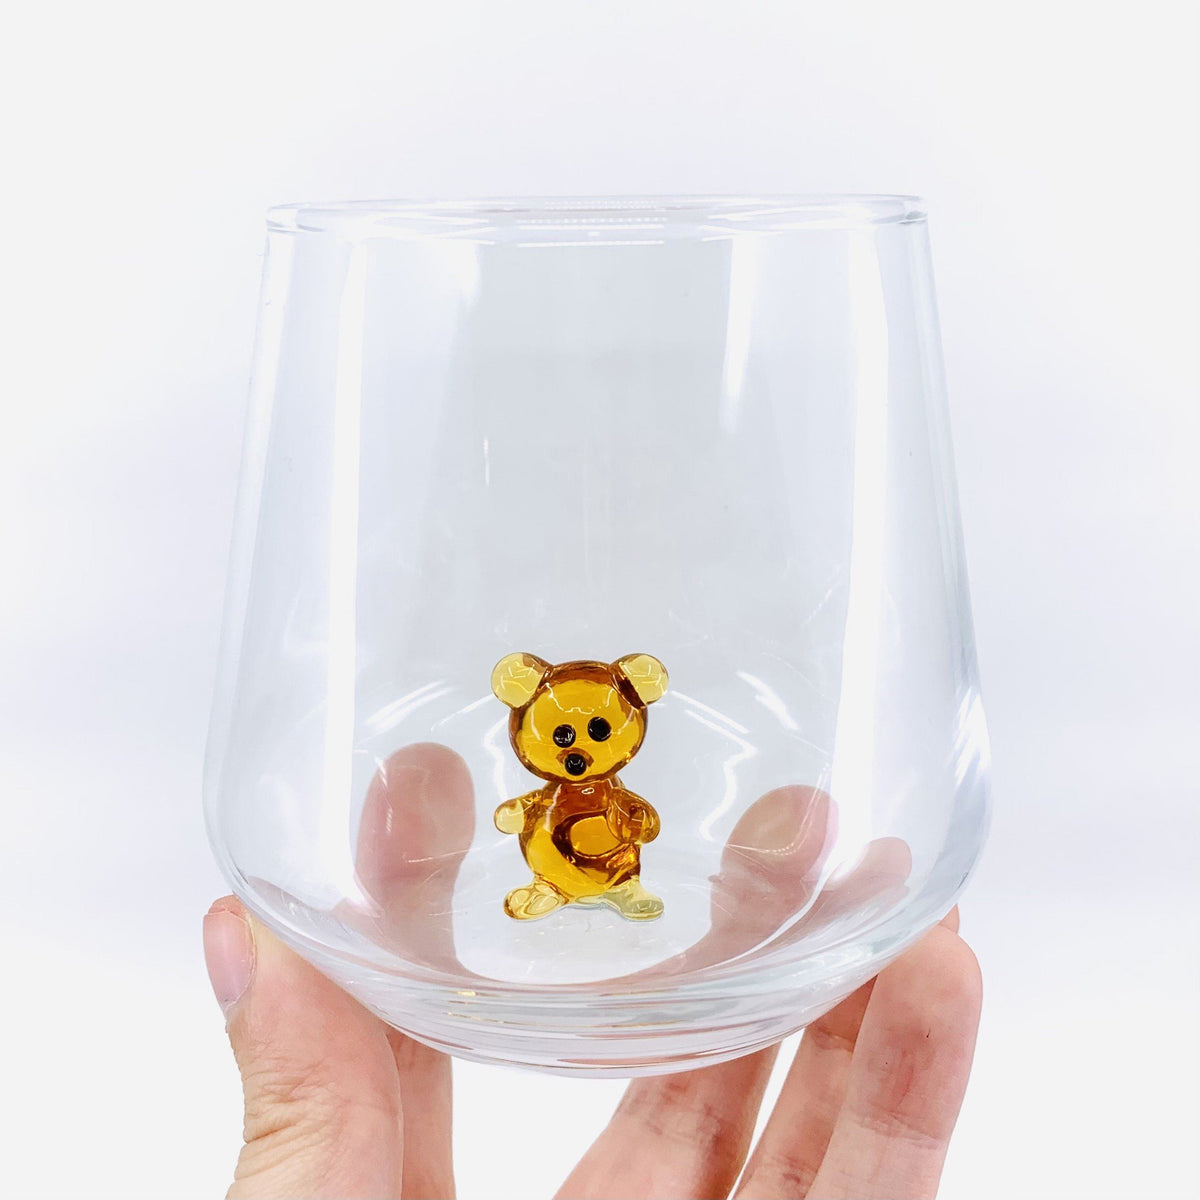 Tiny Animal Drinking Glass - Teddy Bear MiniZoo 